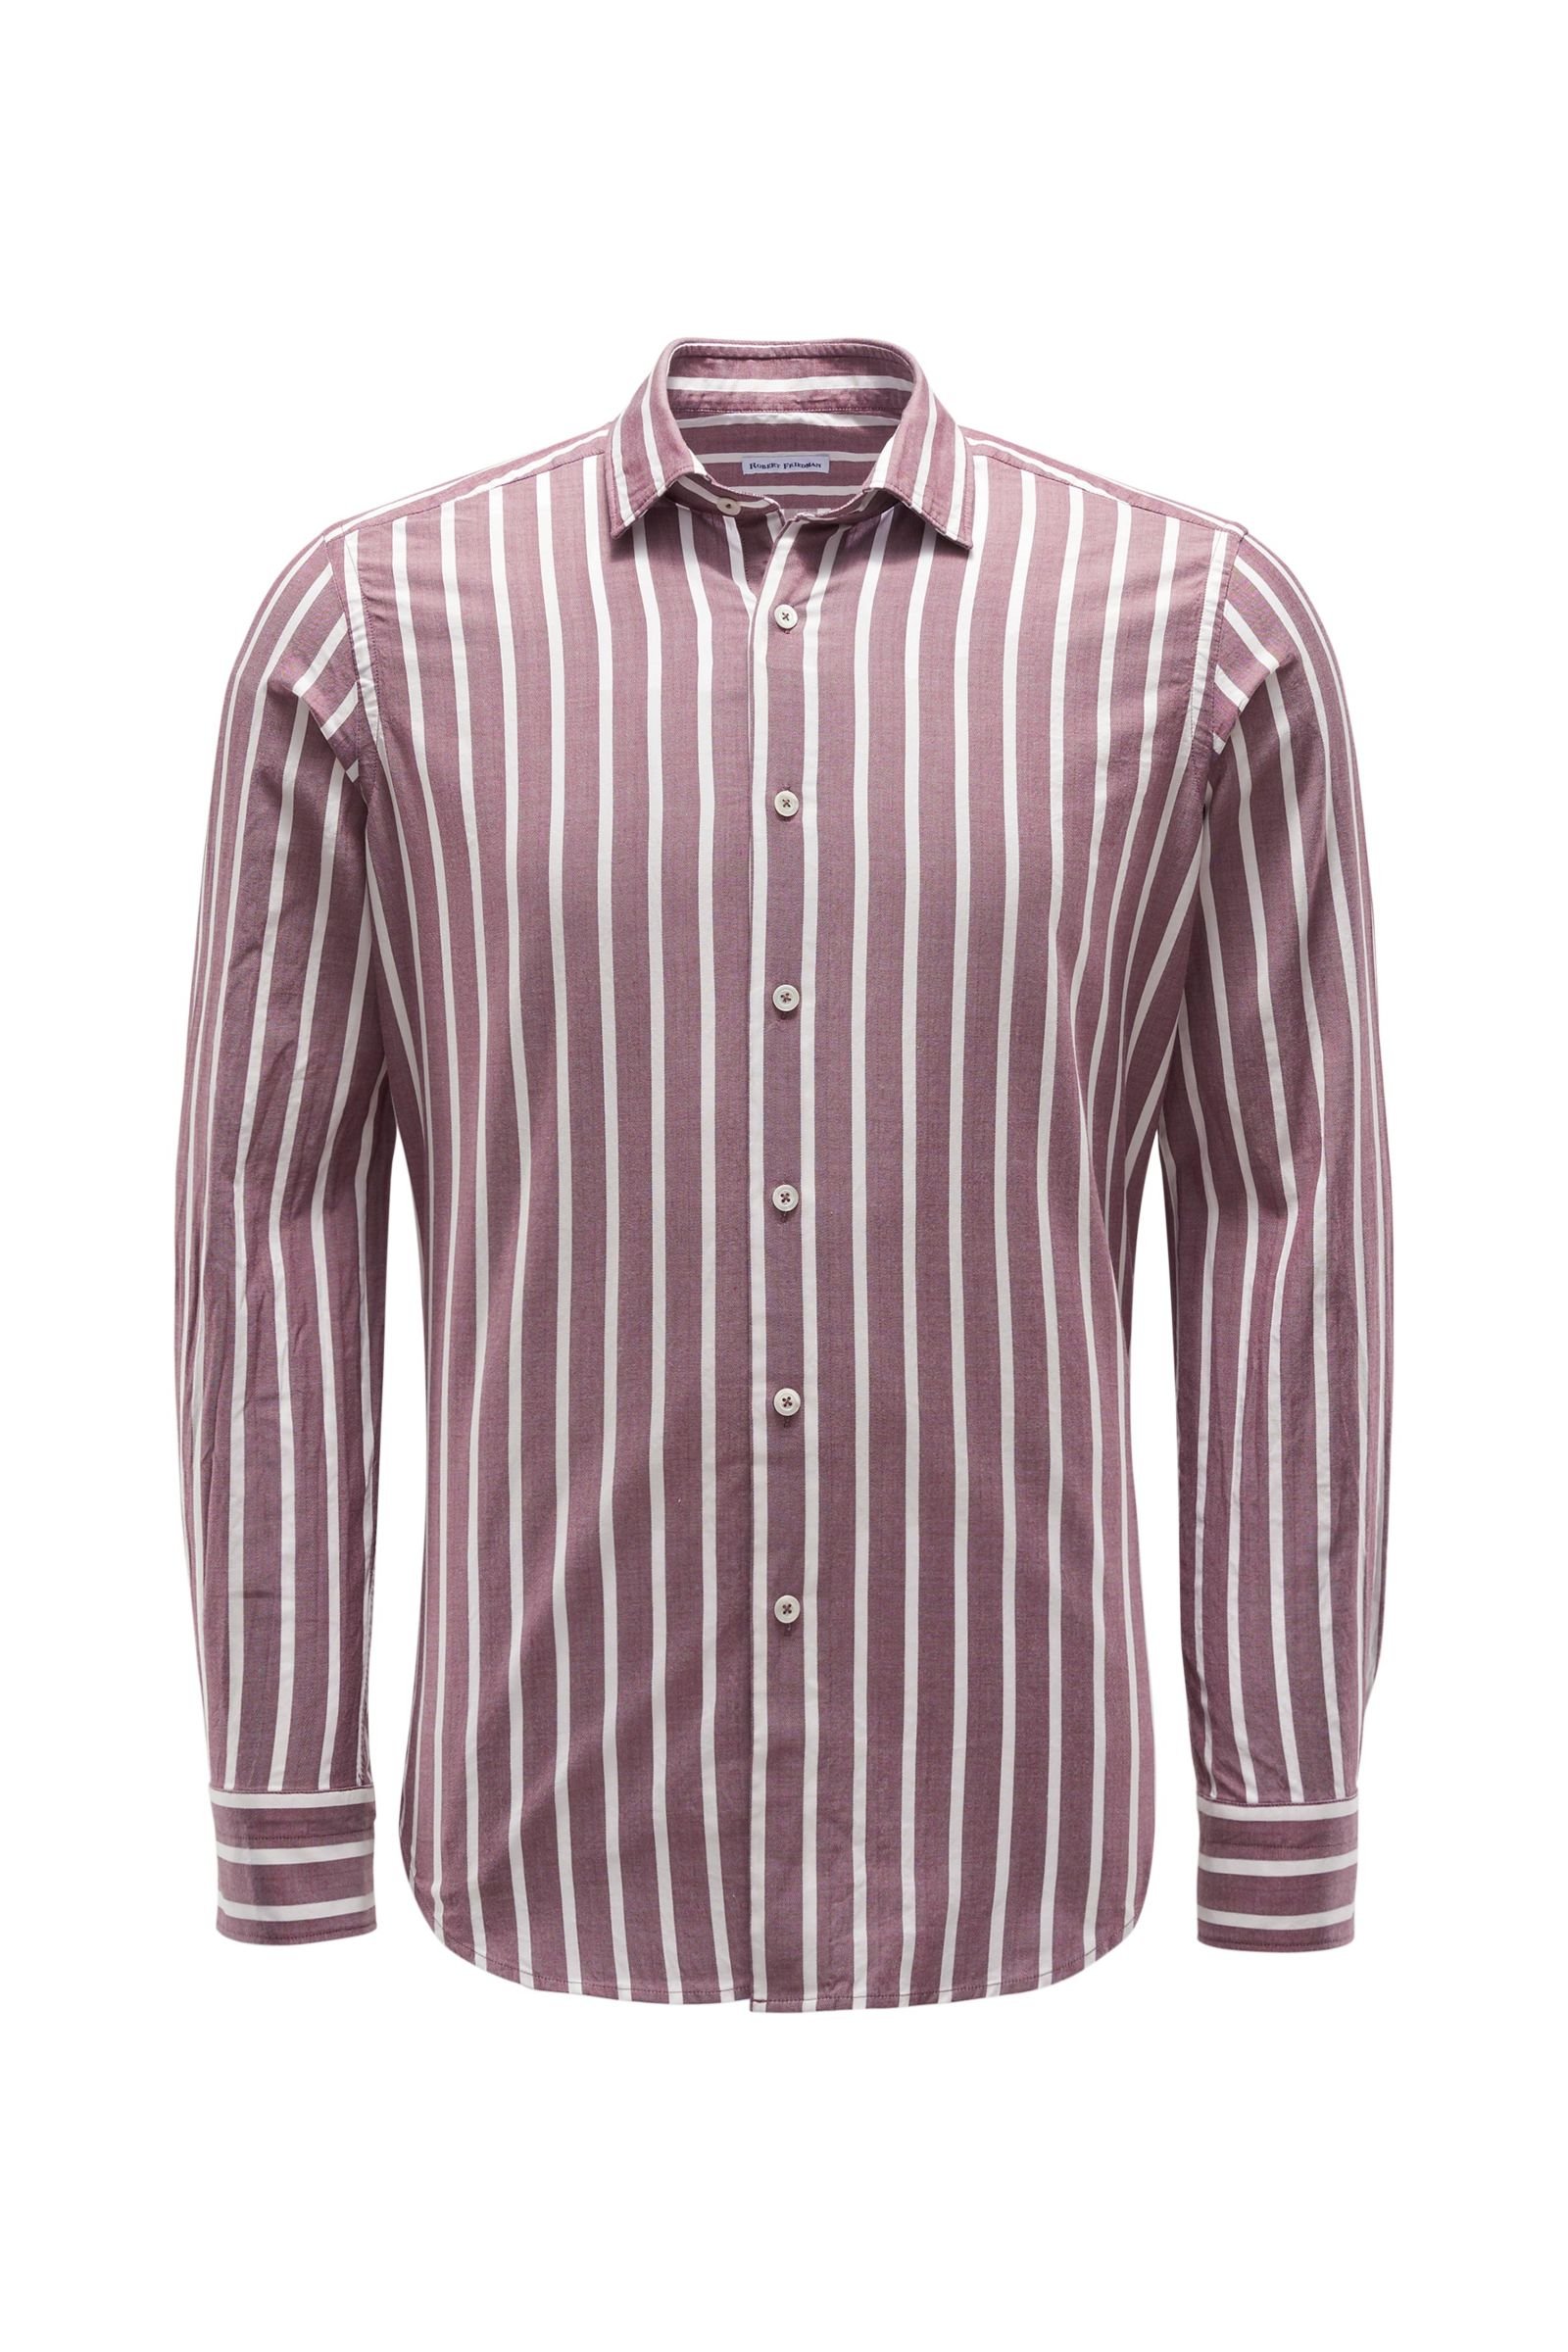 Casual shirt 'Leo' slim collar burgundy/white striped